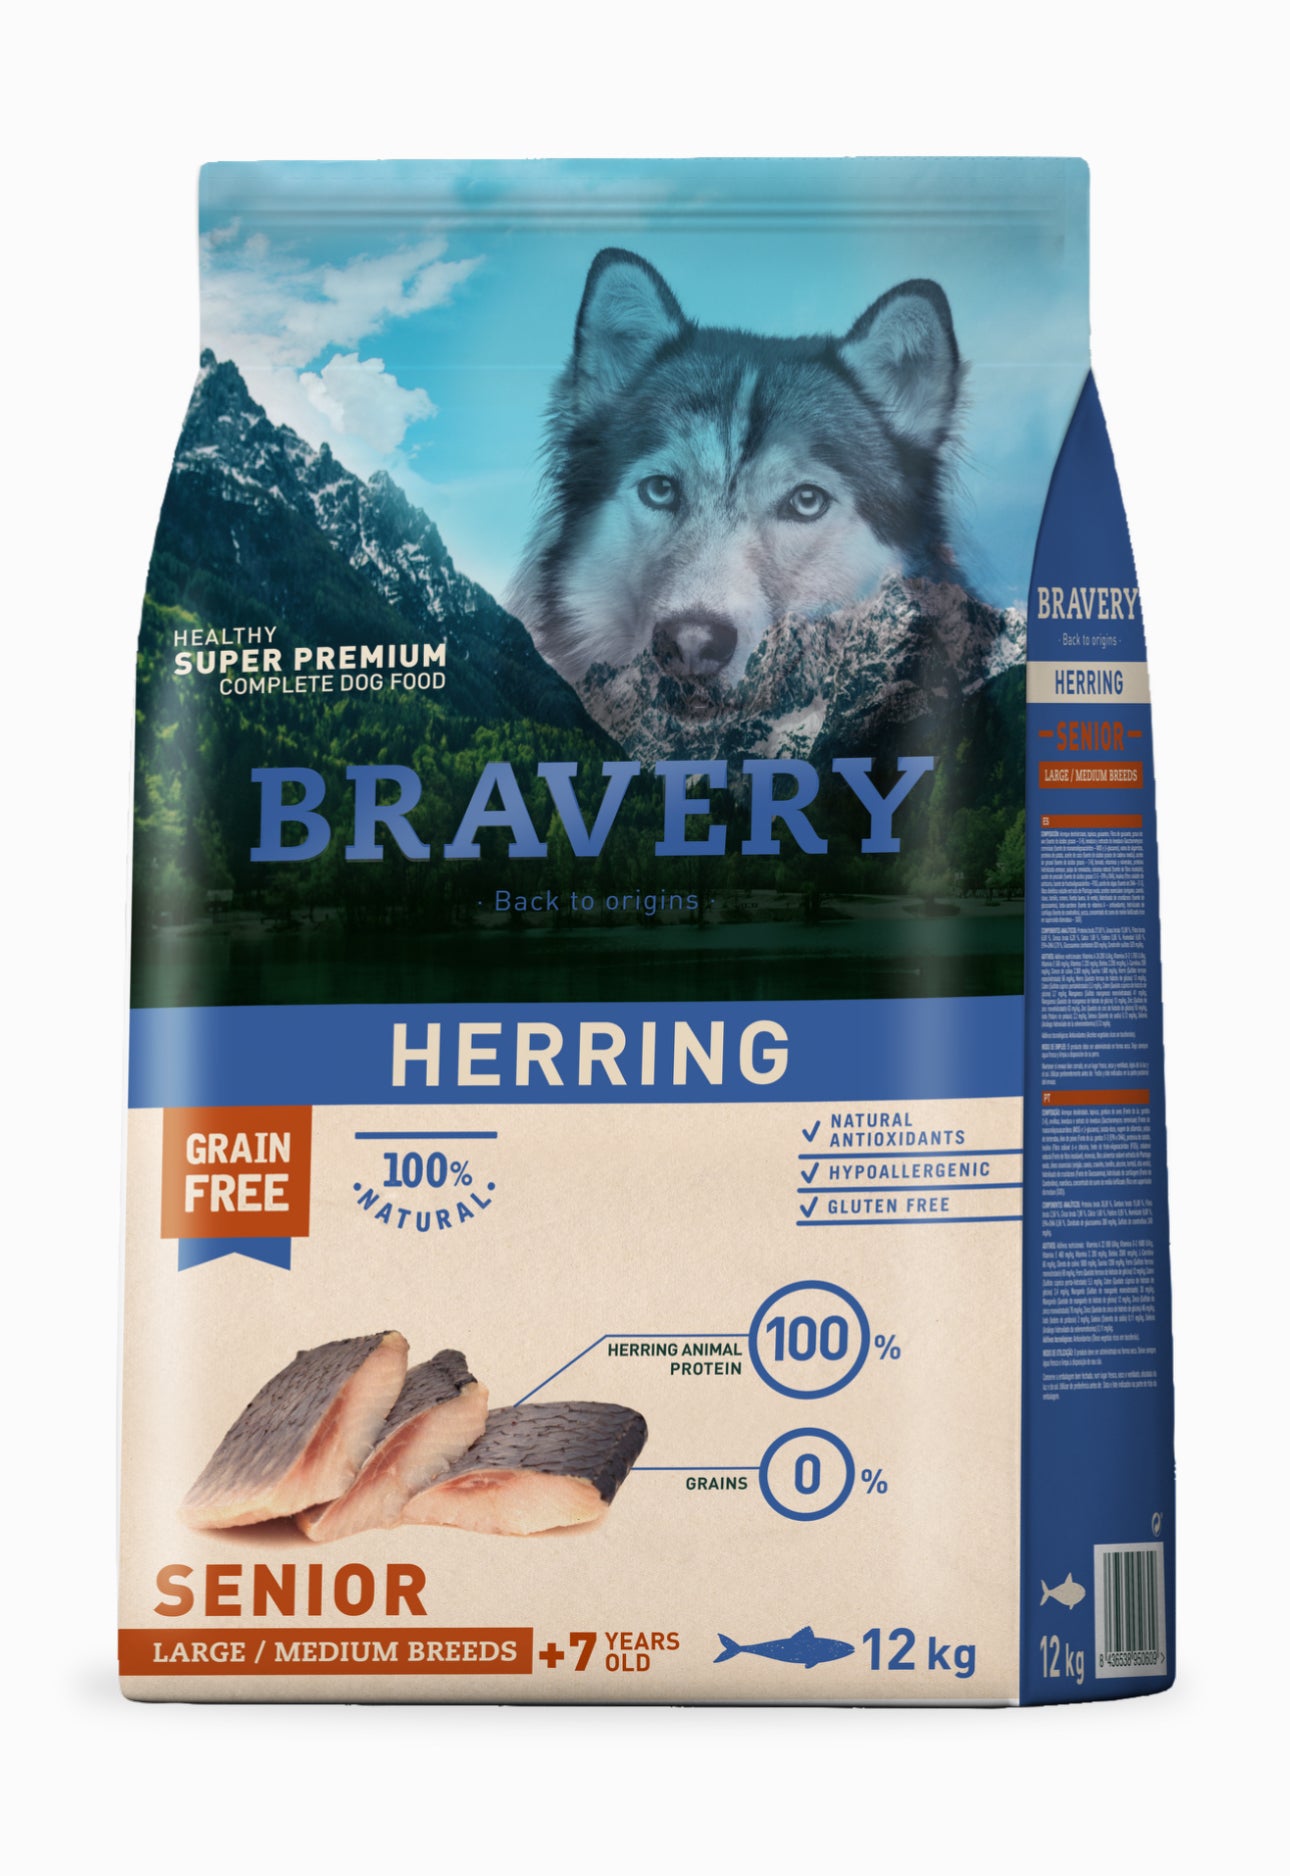 Bravery Perro Herring Senior Medium Larg Breeds 12 kg